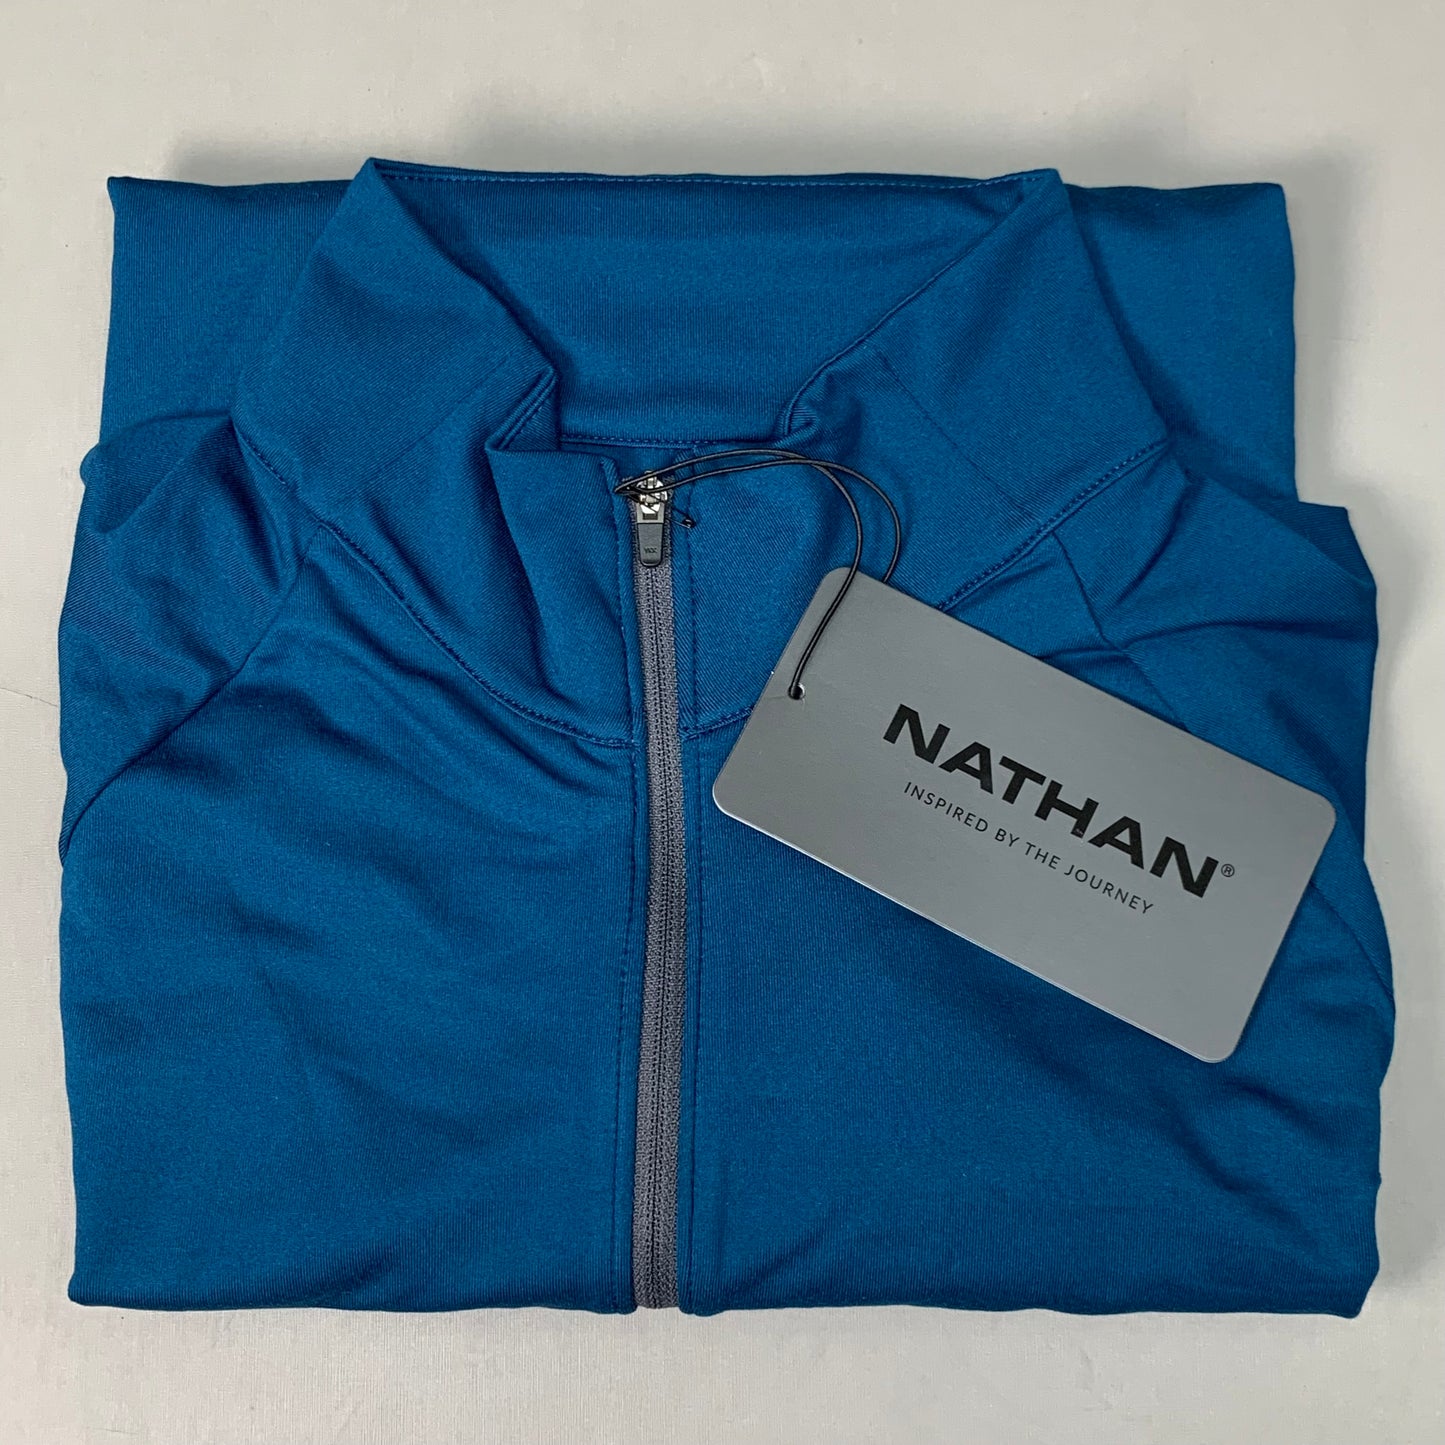 NATHAN Tempo 1/4 Zip Long Sleeve Shirt 2.0 Men's Small Sailor Blue NS50960-60062-S (New)